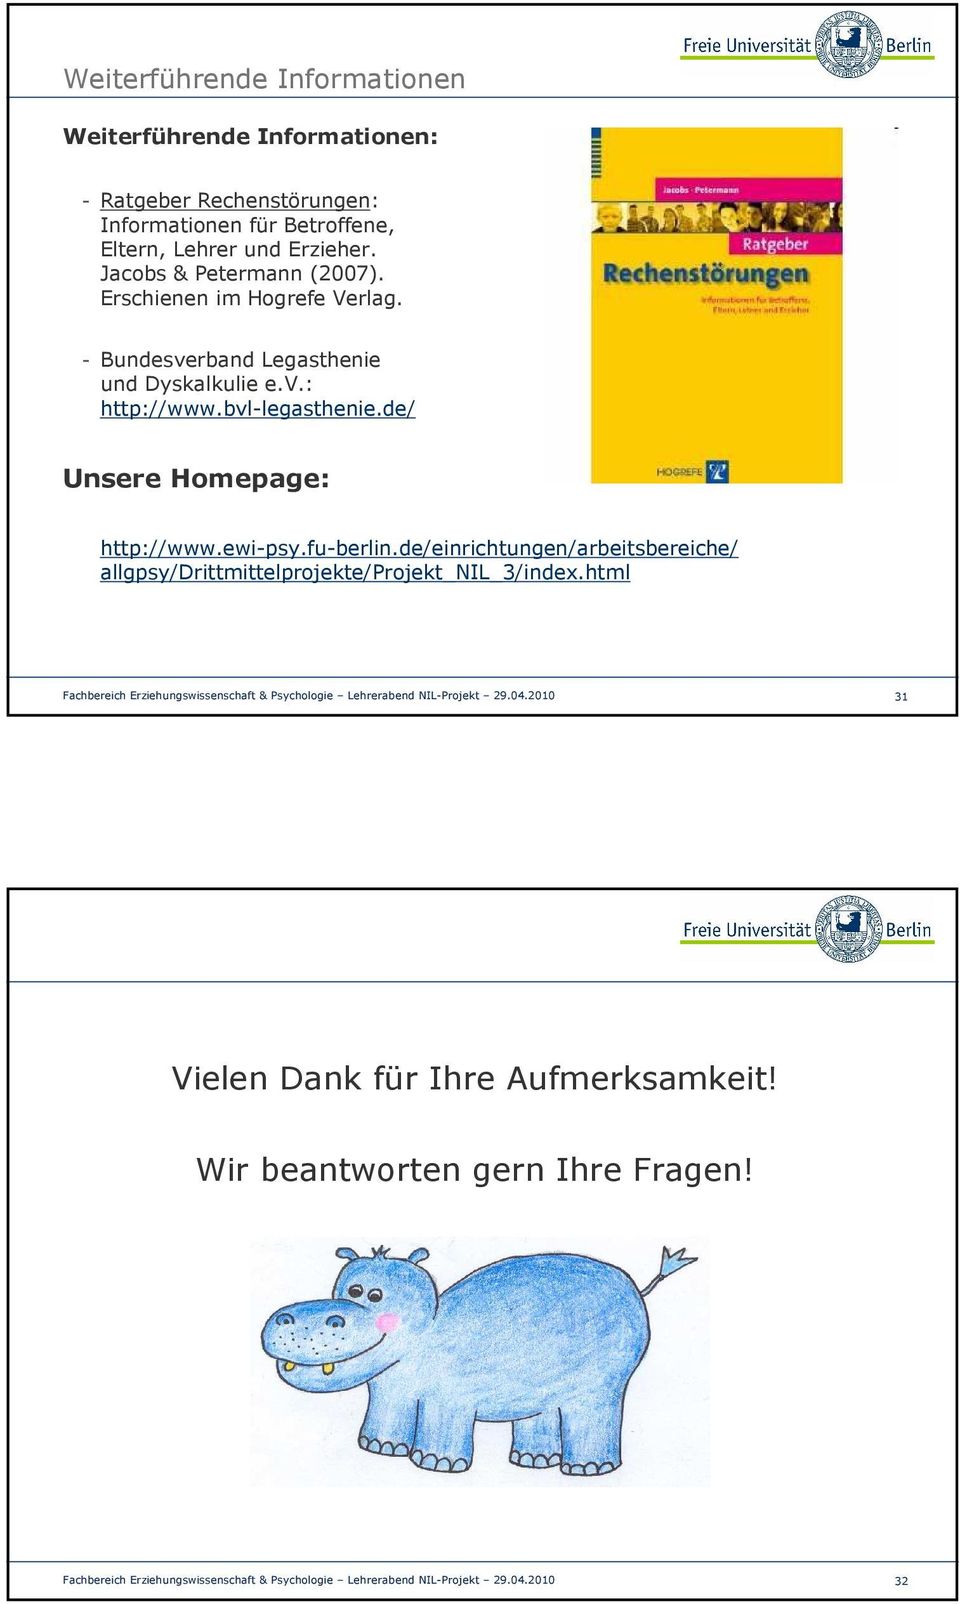 - Bundesverband Legasthenie und Dyskalkulie e.v.: http://www.bvl-legasthenie.de/ Unsere Homepage: http://www.ewi-psy.